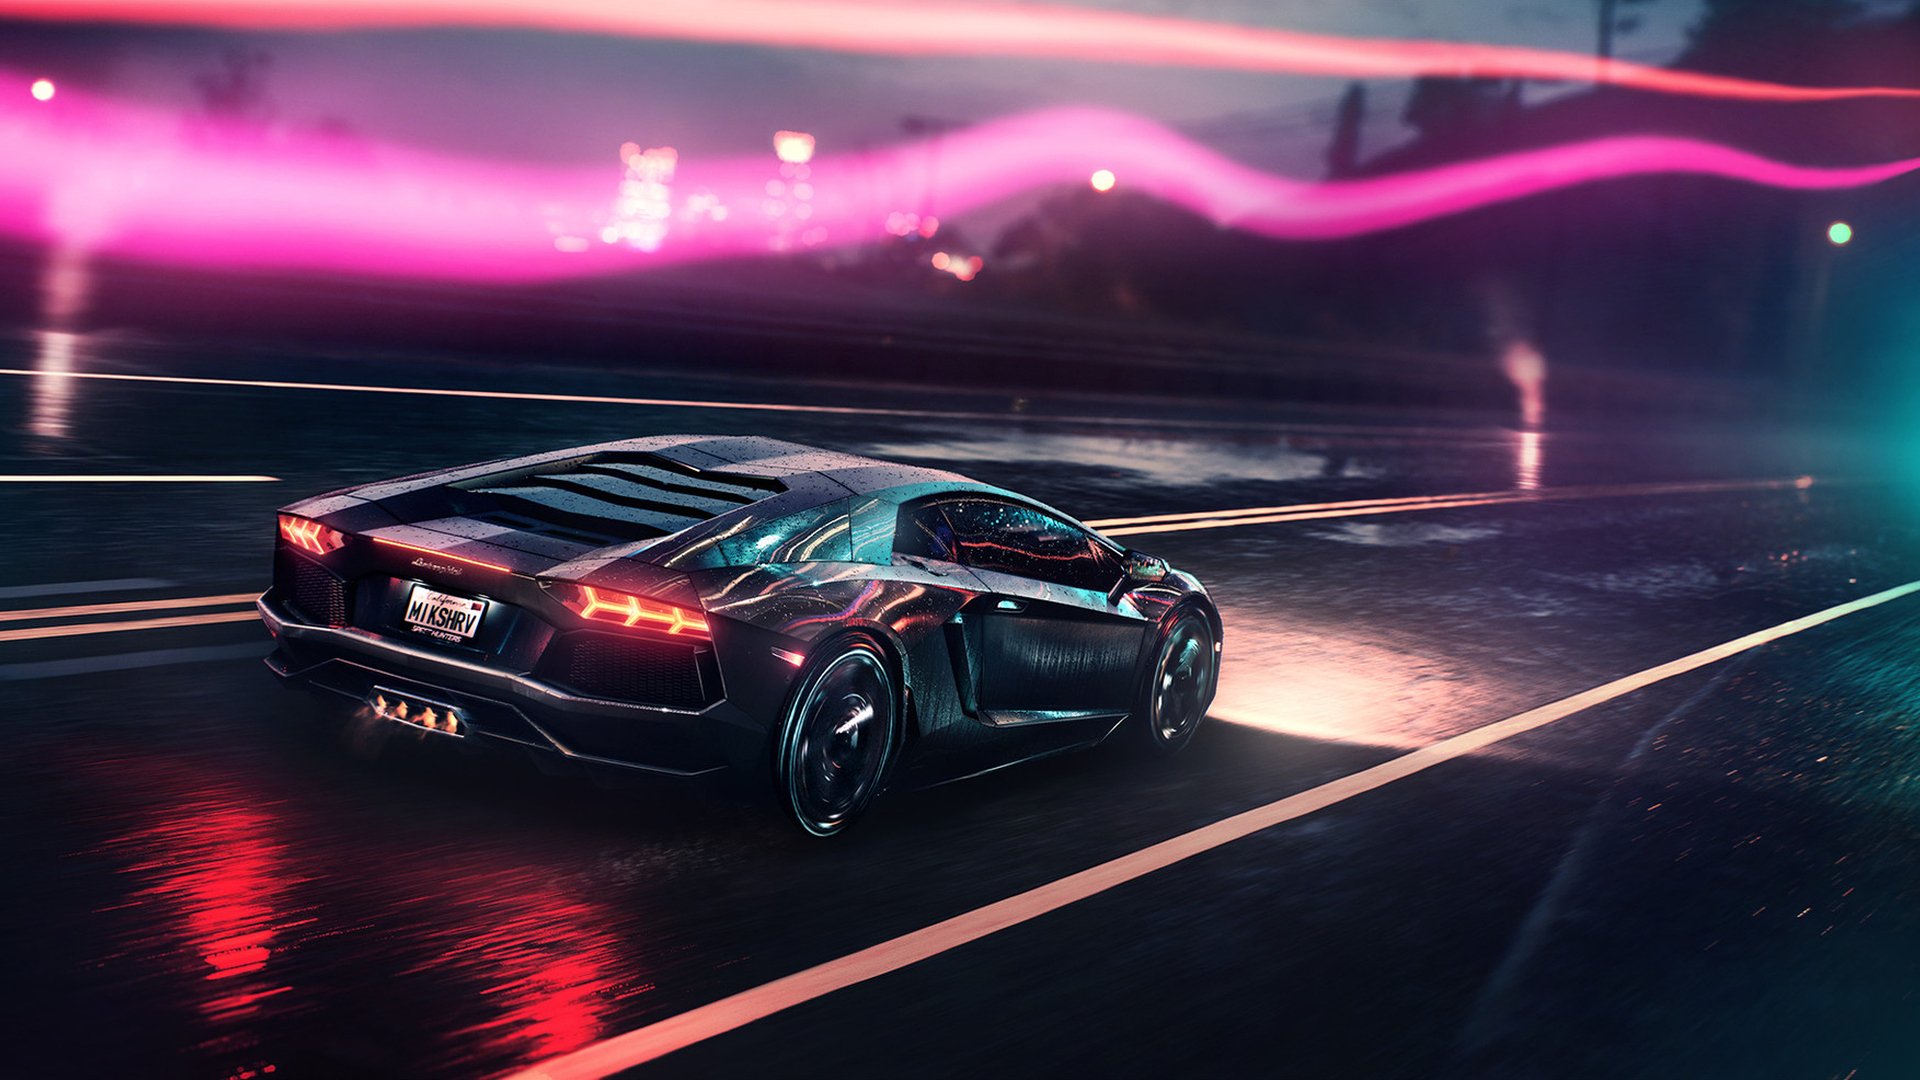 Lamborghini Aventador HD Wallpaper | Background Image | 1920x1080 | ID